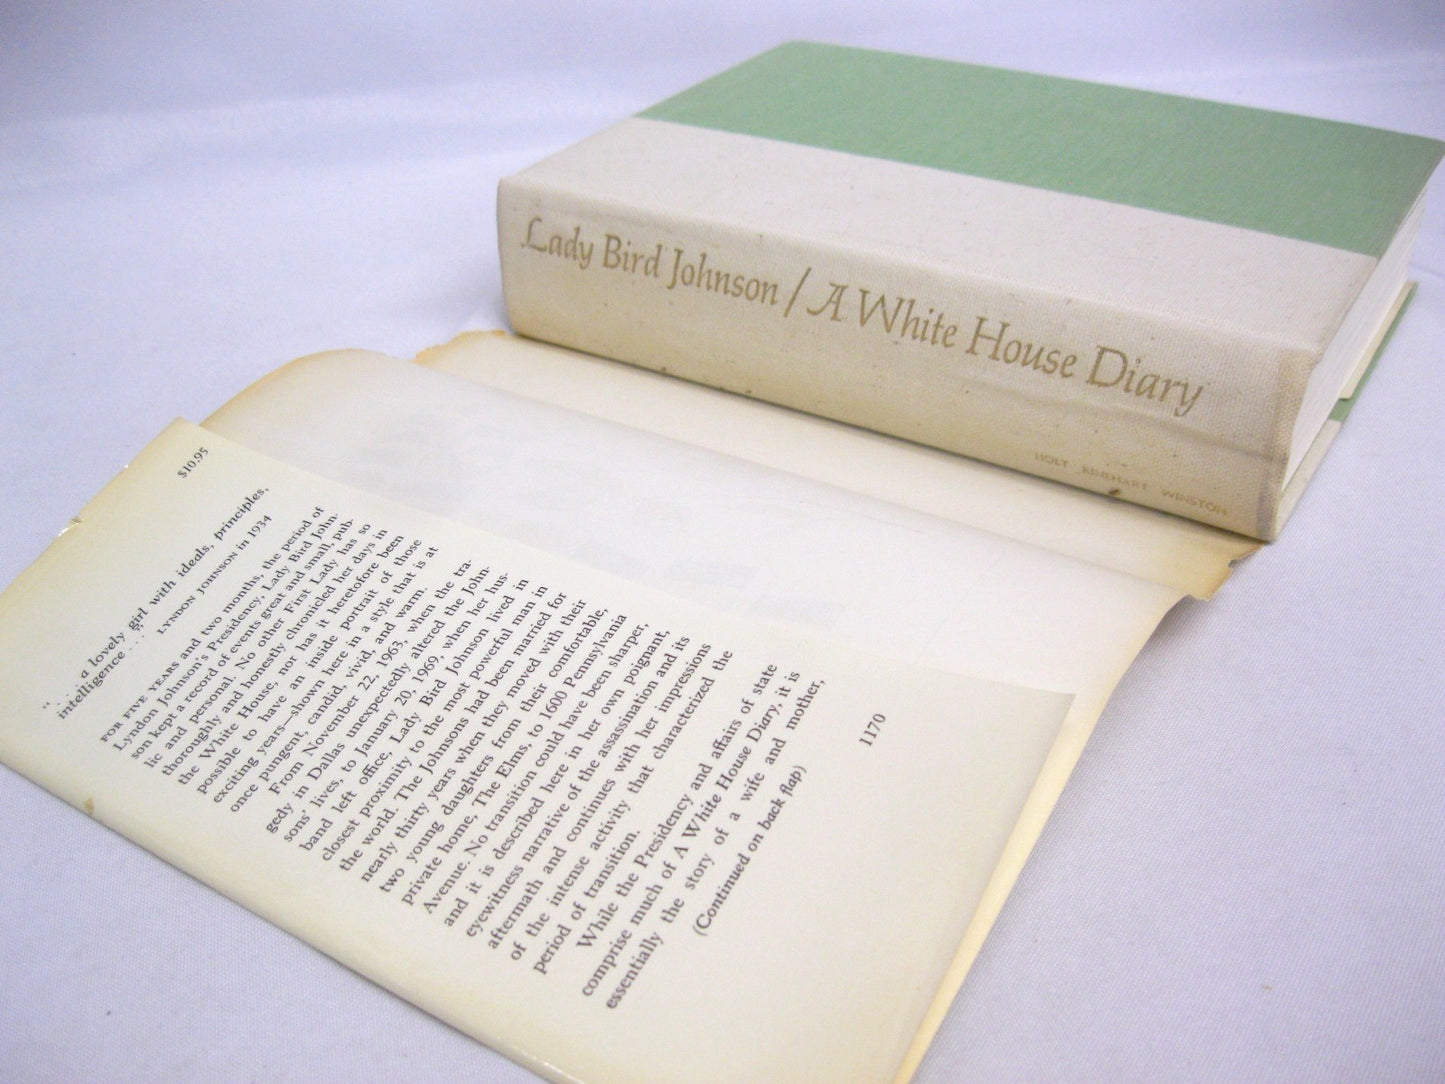 A White House Diary by Lady Bird Johnson